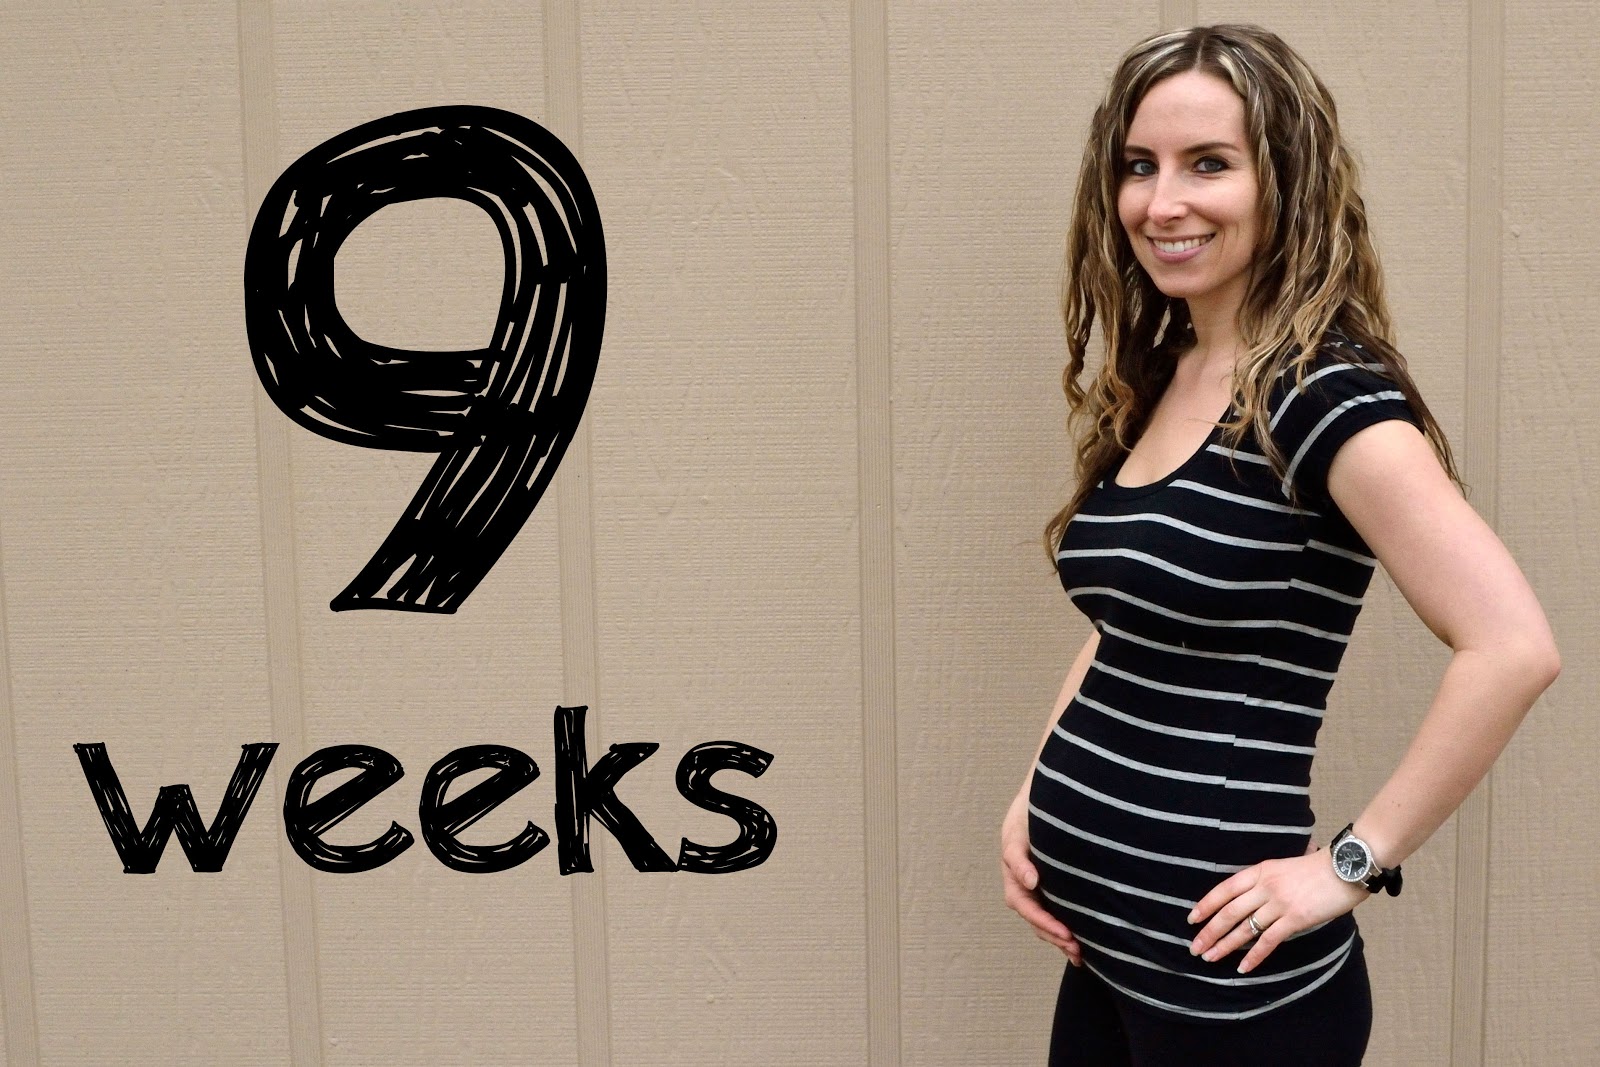 Конец 9 недели. Живот на 9 неделе беременности. Животик на 9 неделе беременности. Беременный живот на 9 неделе.